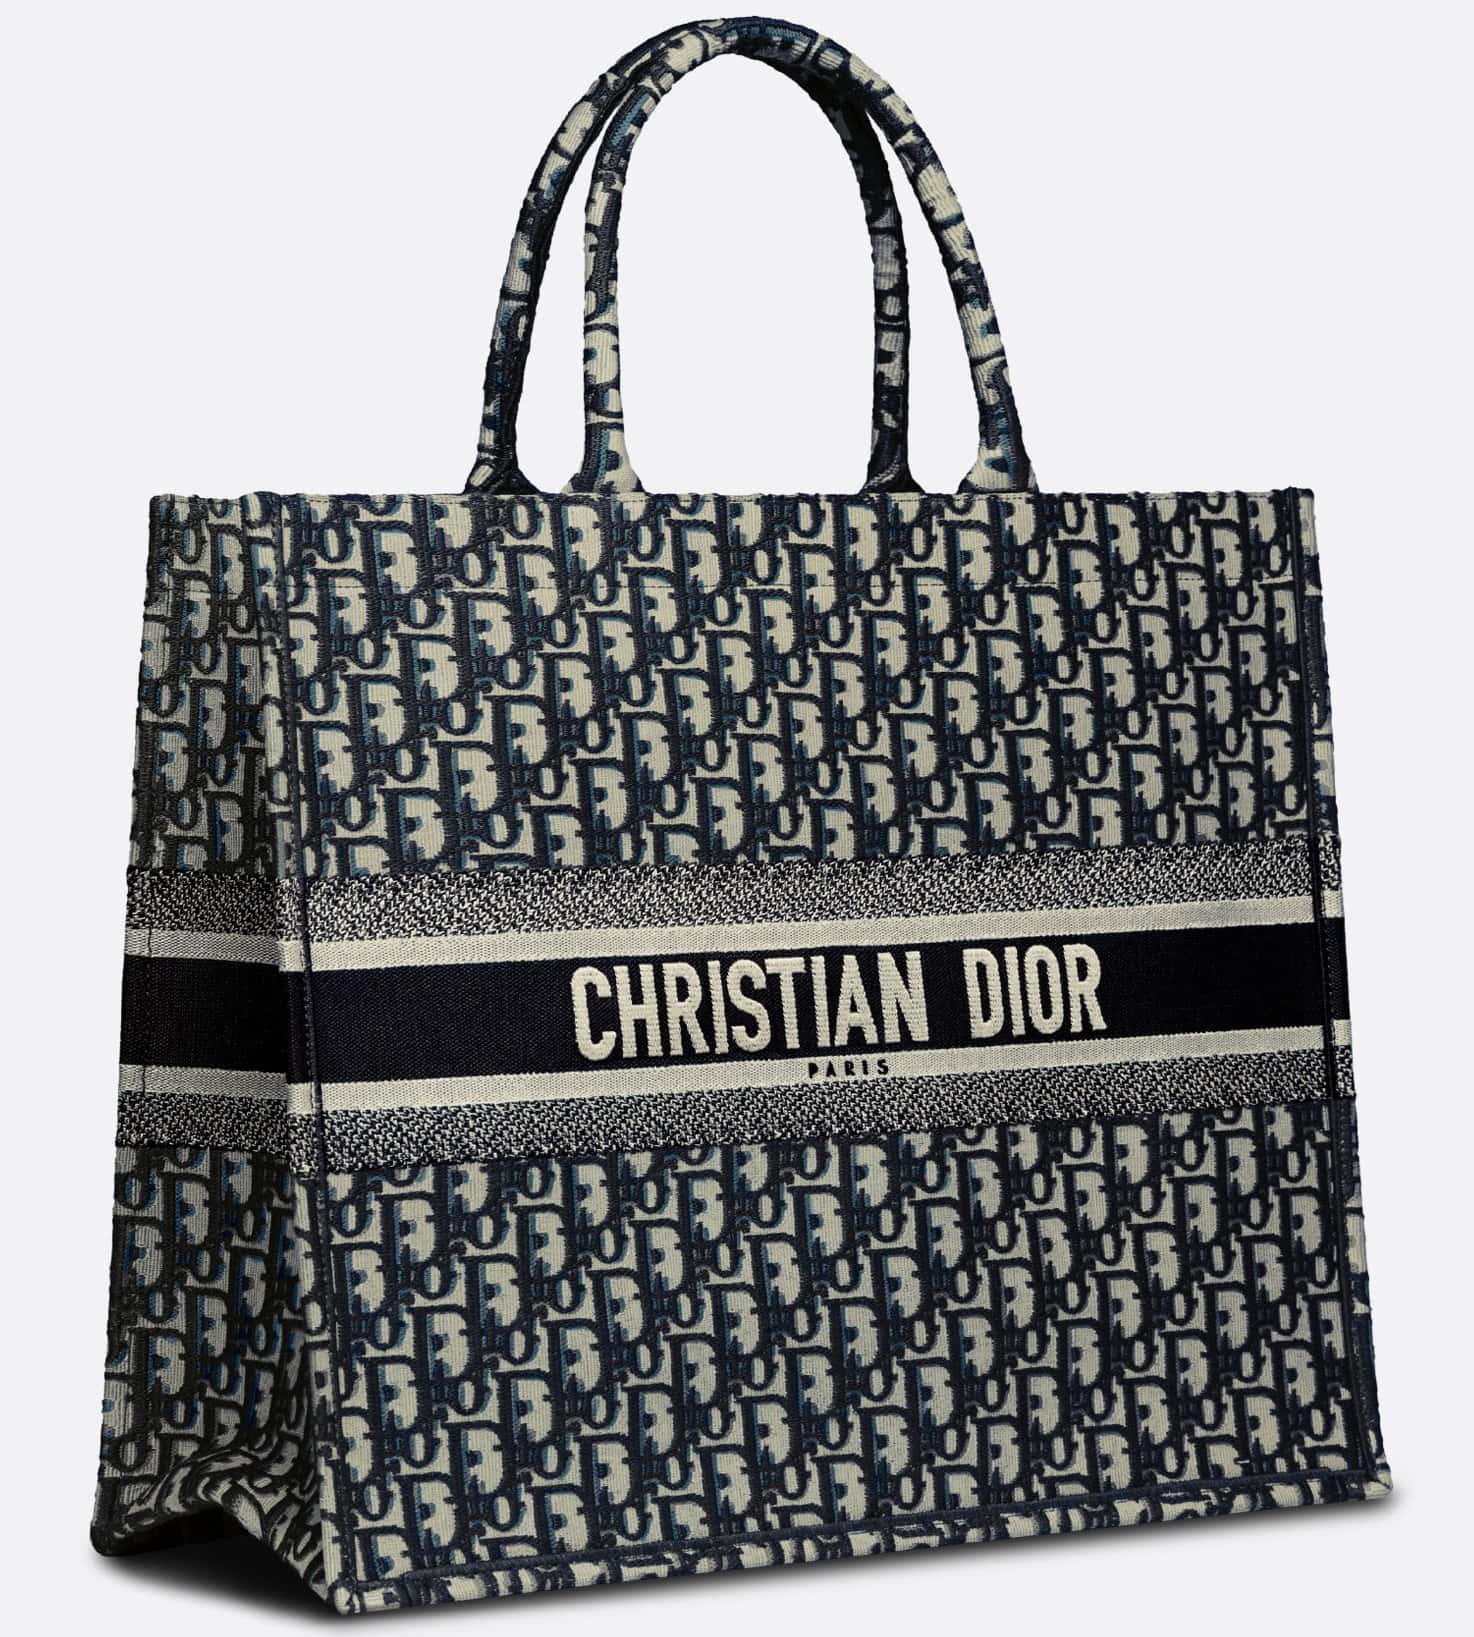 Best bags to buy in Paris. Best French handbag brands.